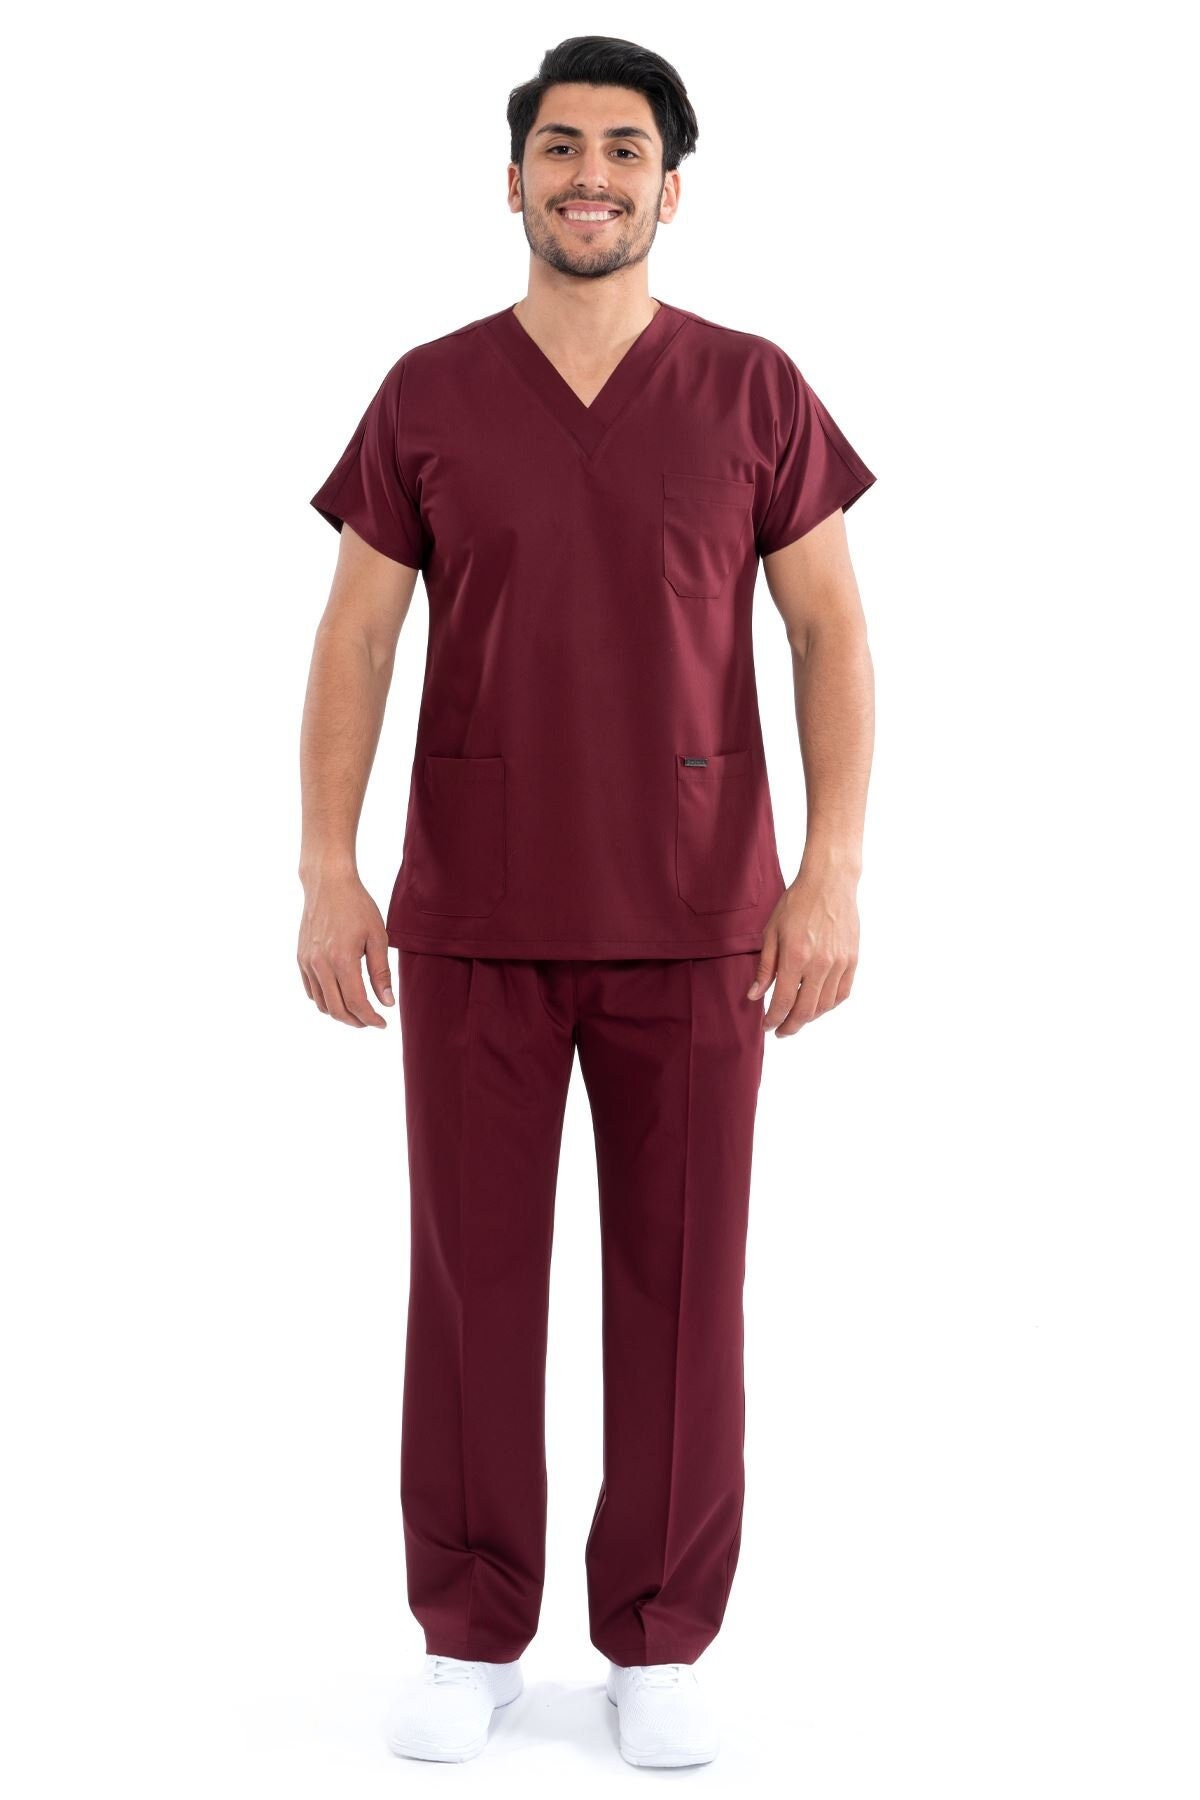 Men's Dark Burgundy Scrub Set, Easy Care Nurse Uniform, Custom Scrub,stretchy  Fabric Uniform, Medical Scrub,odor Resistant Scrubs,et1016lv -  Canada